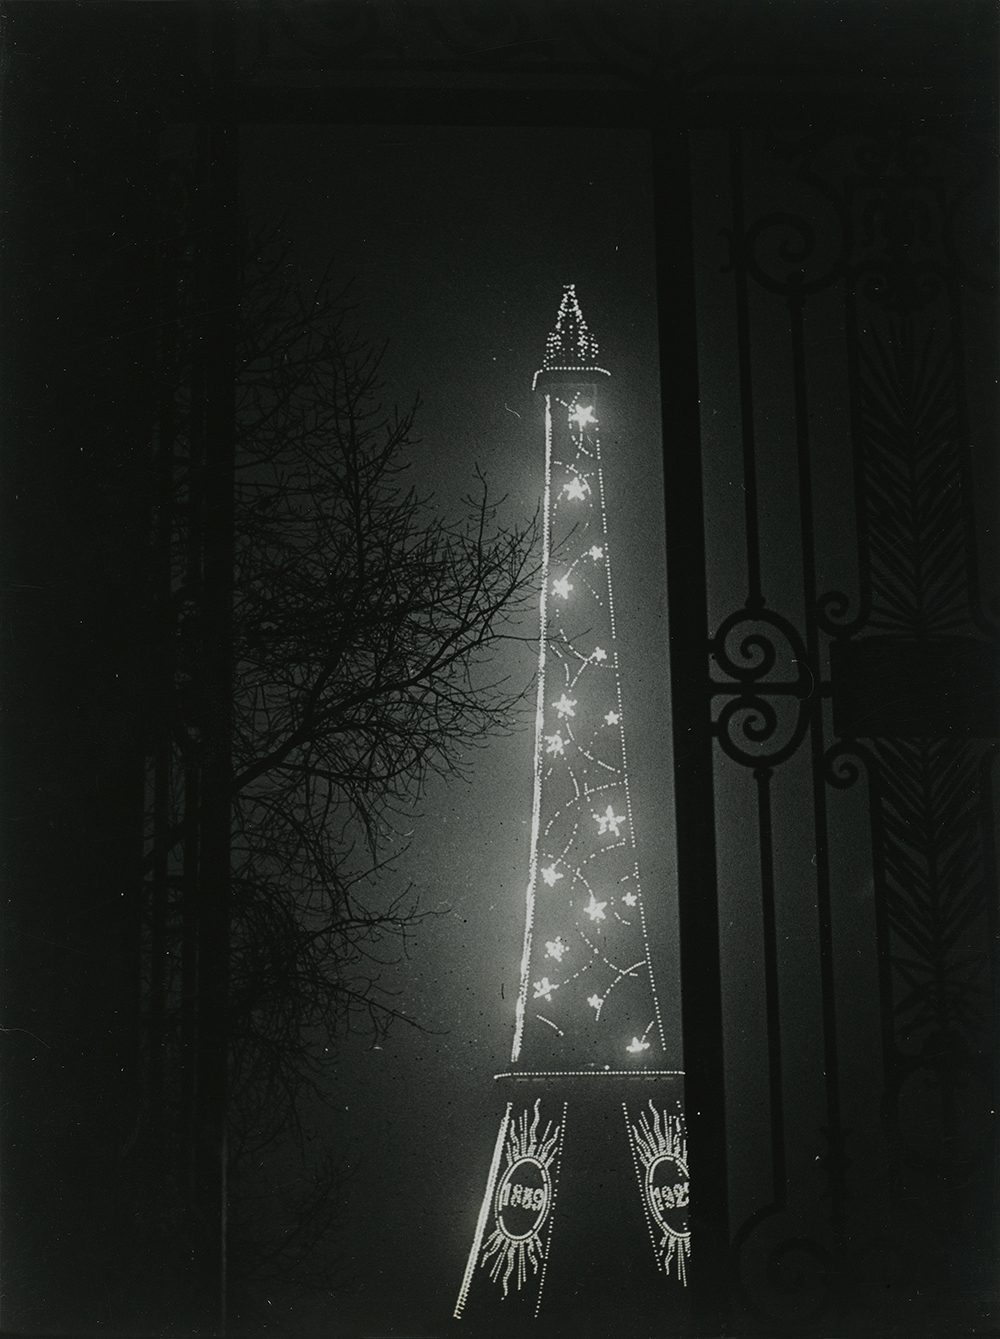 Brassaï (Gyula Halász) Tour Eiffel (Eiffel Tower), c.1930-32, photo © Philippe Migeat - Centre Pompidou, MNAM-CCI /Dist. RMN-GP © Estate Brassaï - RMN-Grand Palais. On display at the Dali Museum through April 9th.